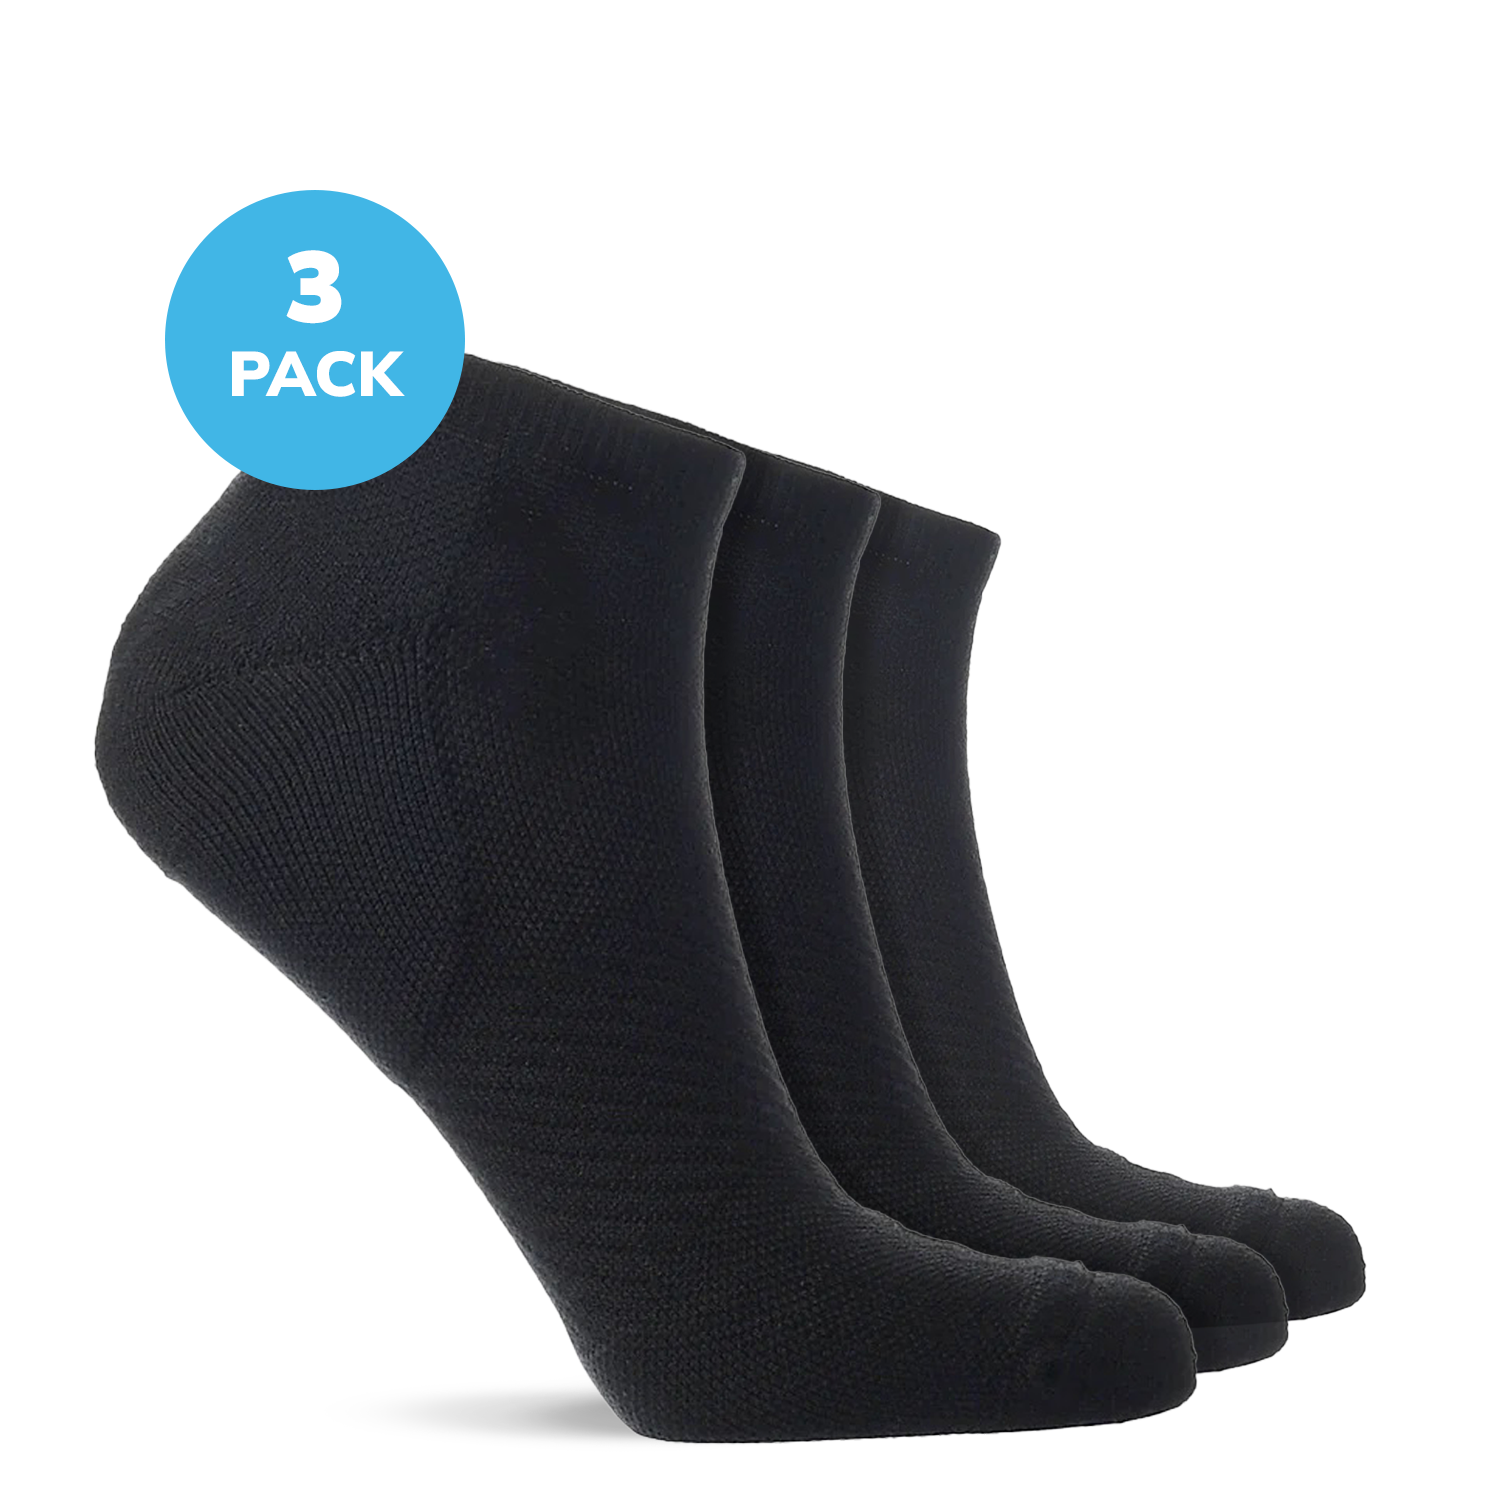 Compression Low Cut Ankle Socks (10-20 mmHg)